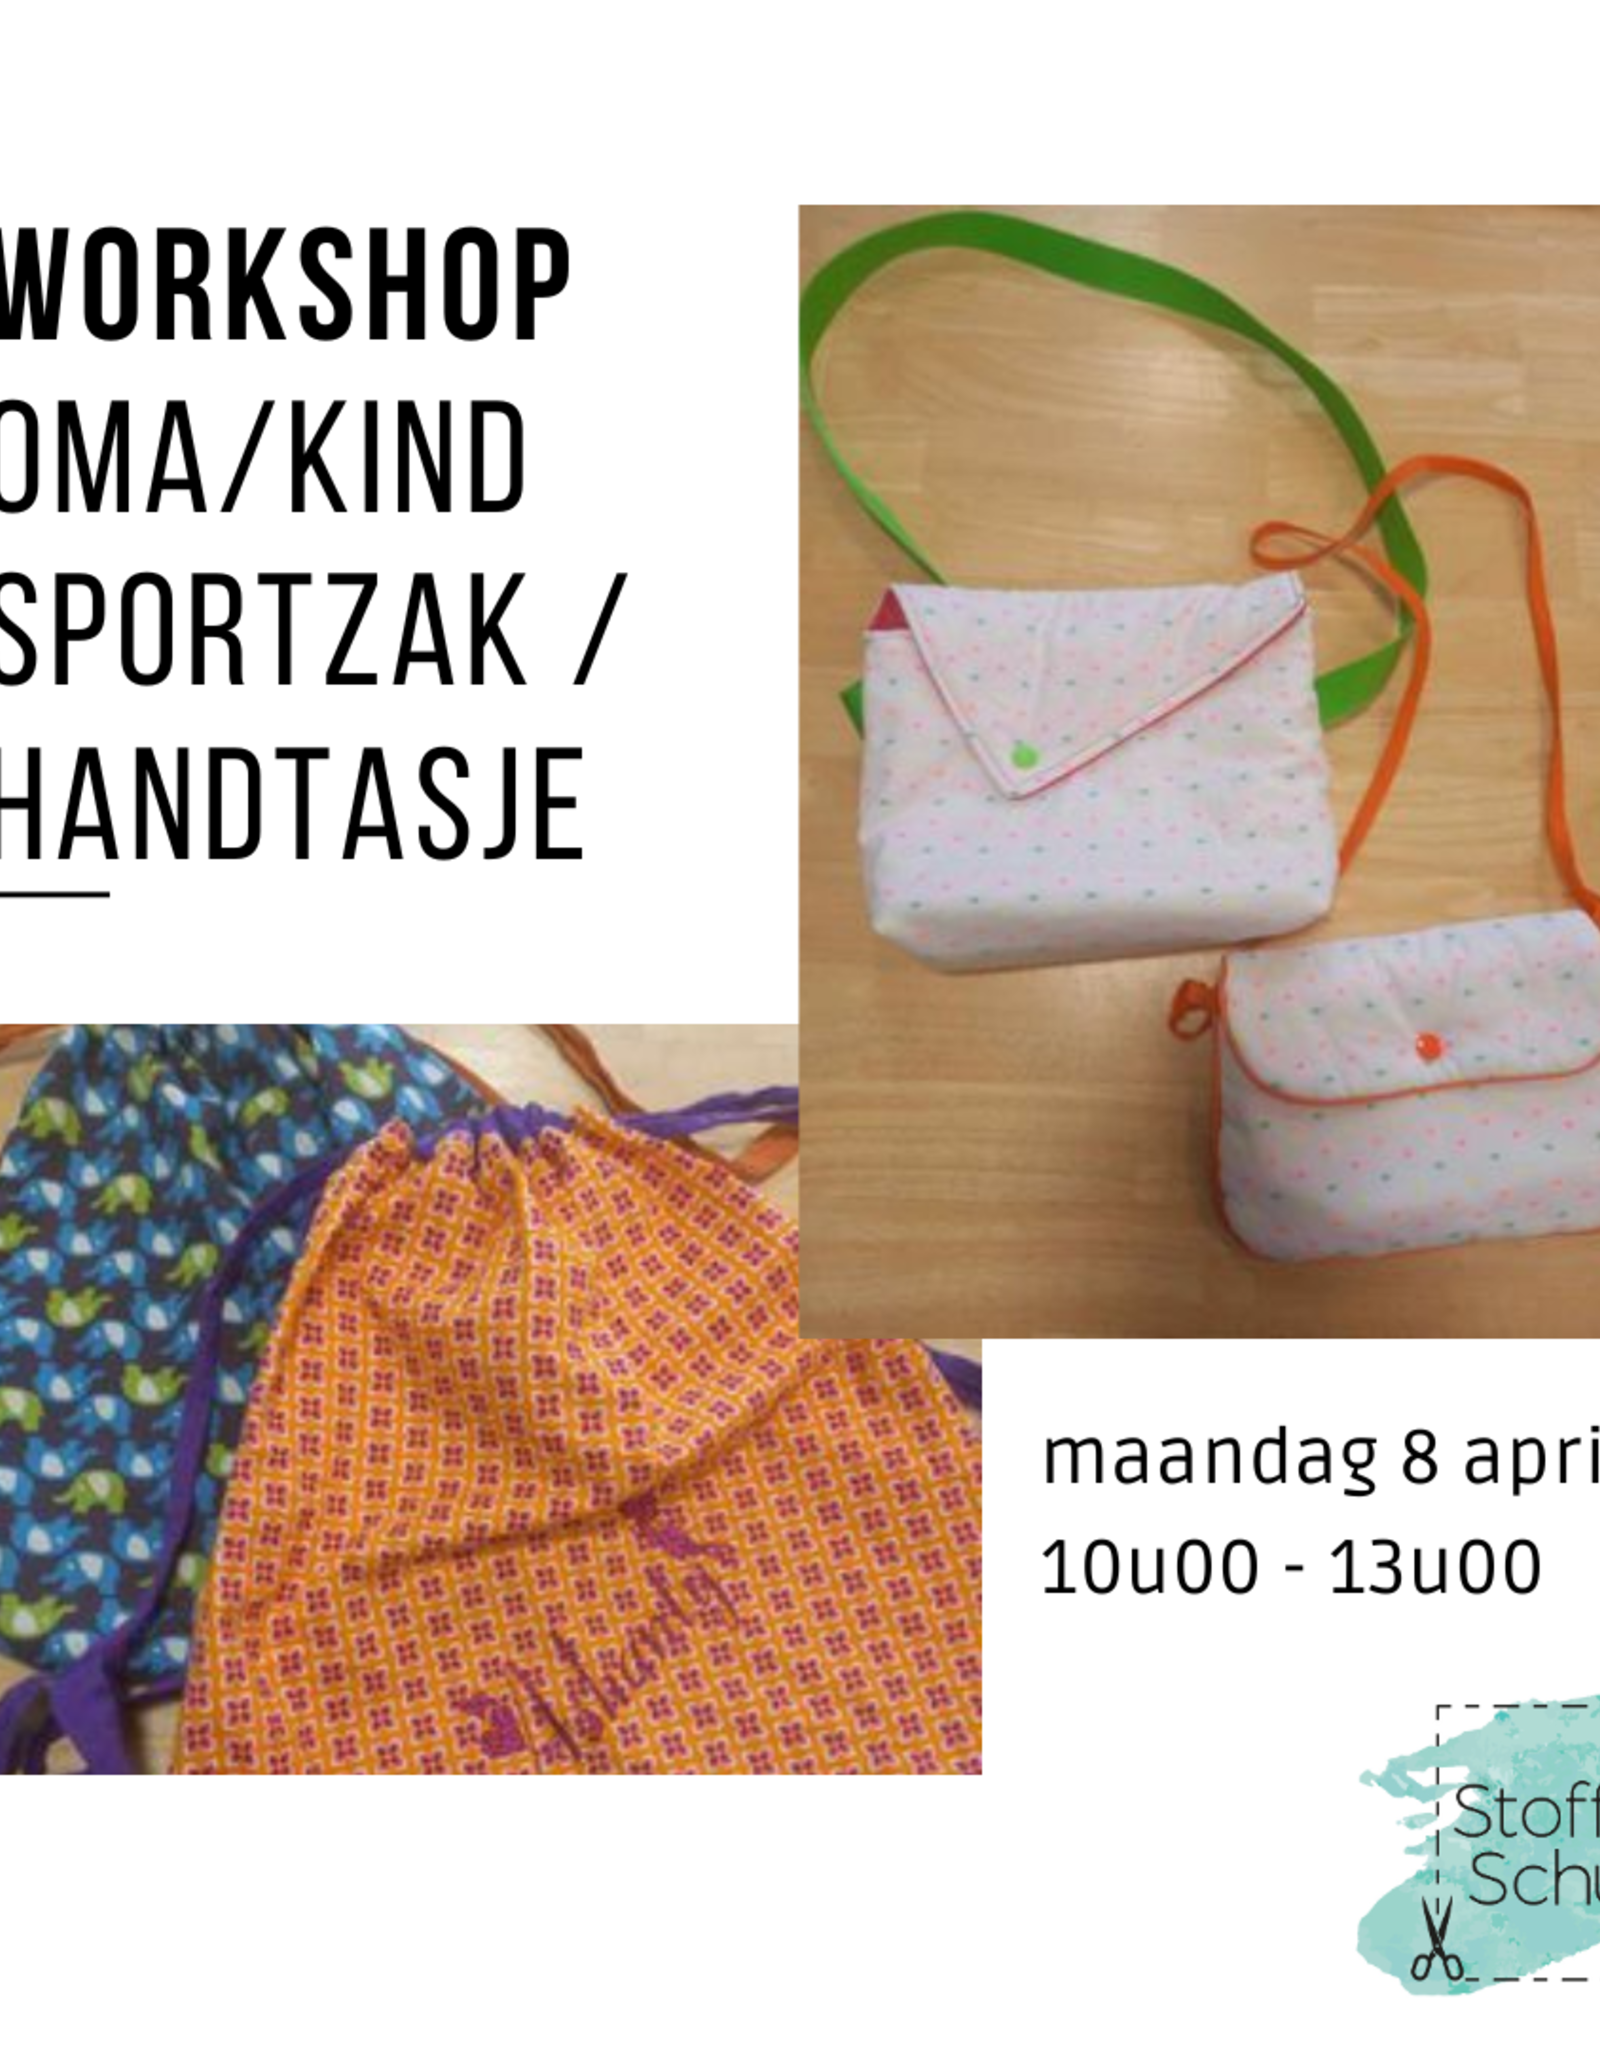 Oma/kind workshop : sportzakje of handtasje naaien 8 april 10u-13u